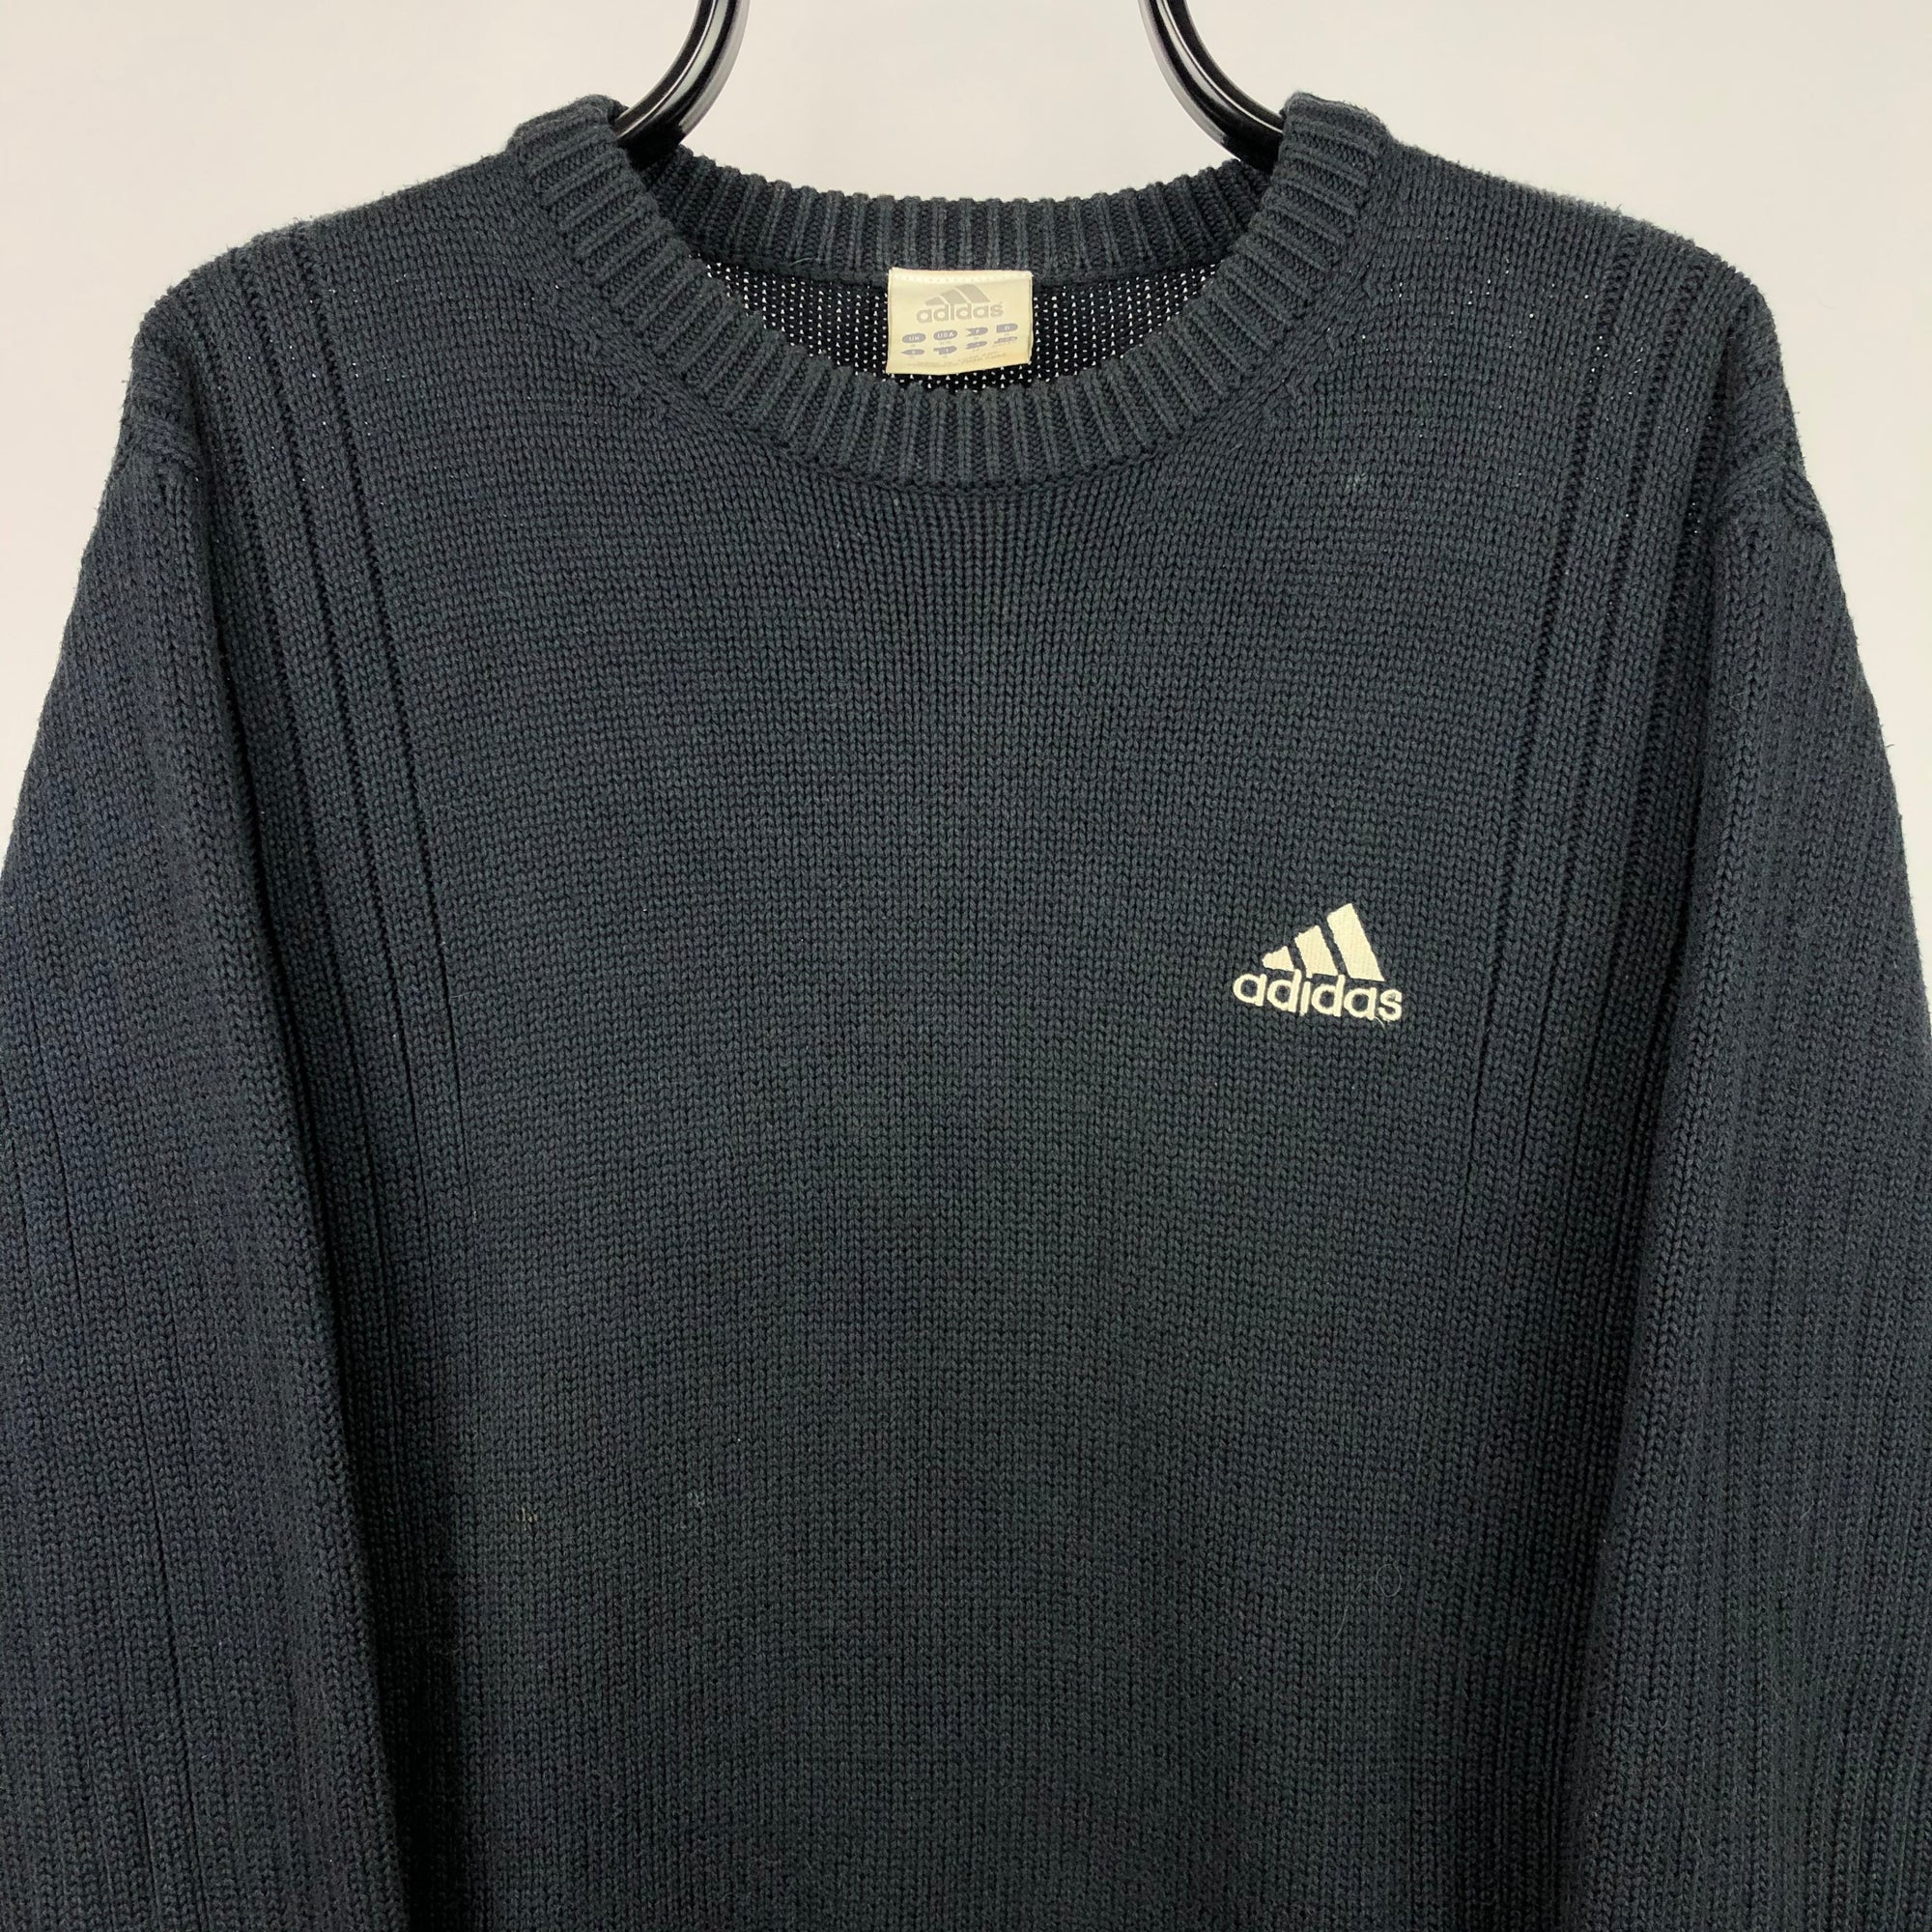 Vintage Adidas Knit Sweater in Black - Men's Medium/Women's Large